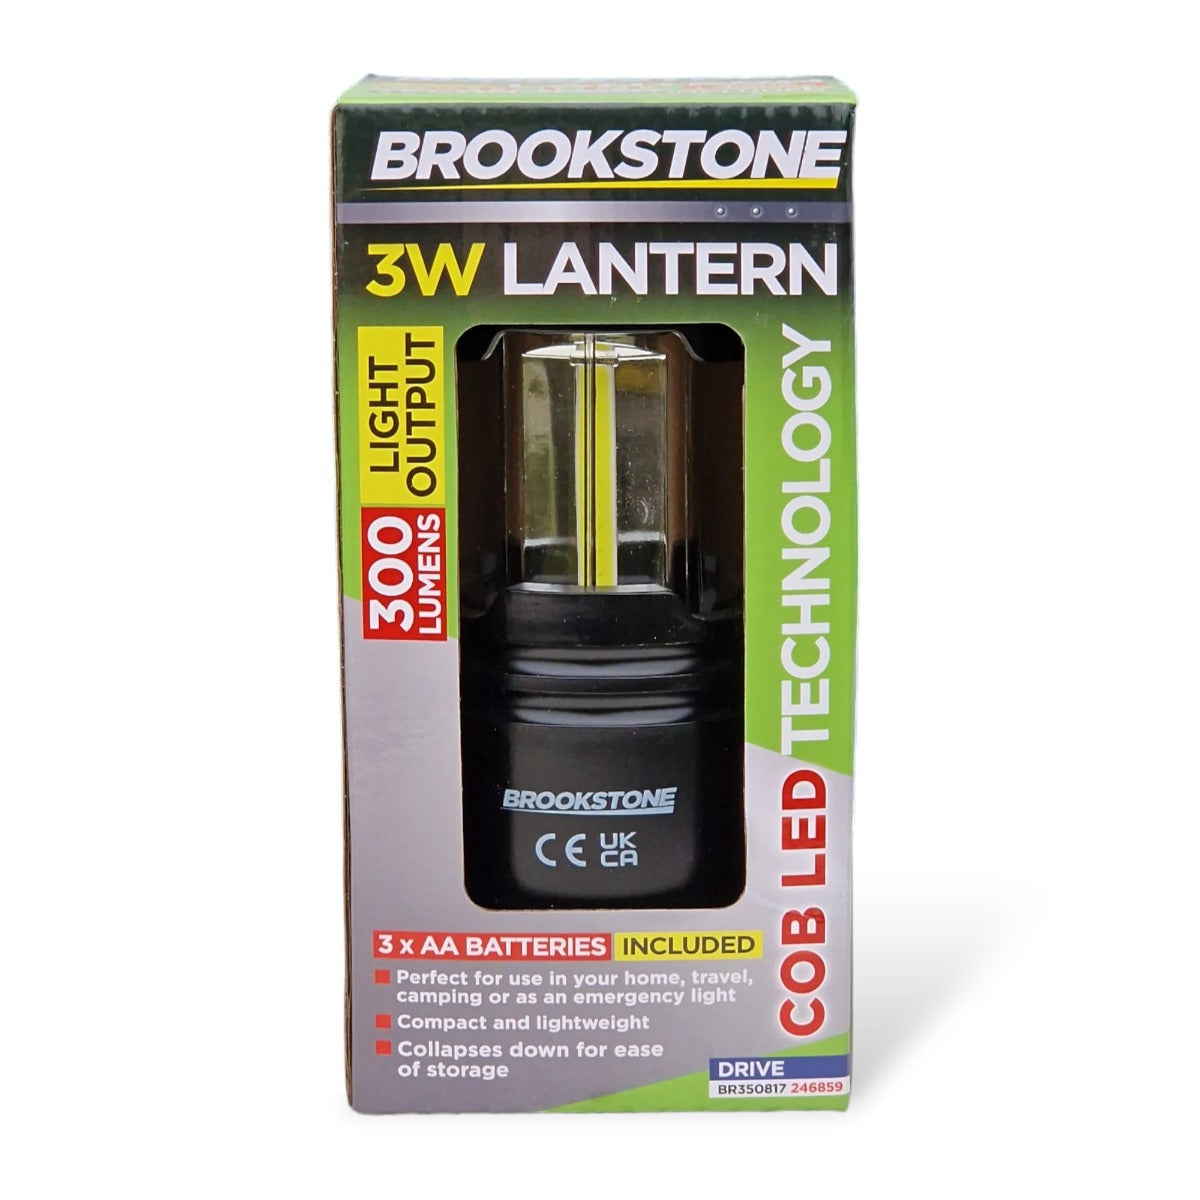 Brookstone 3W Lantern - COB LED